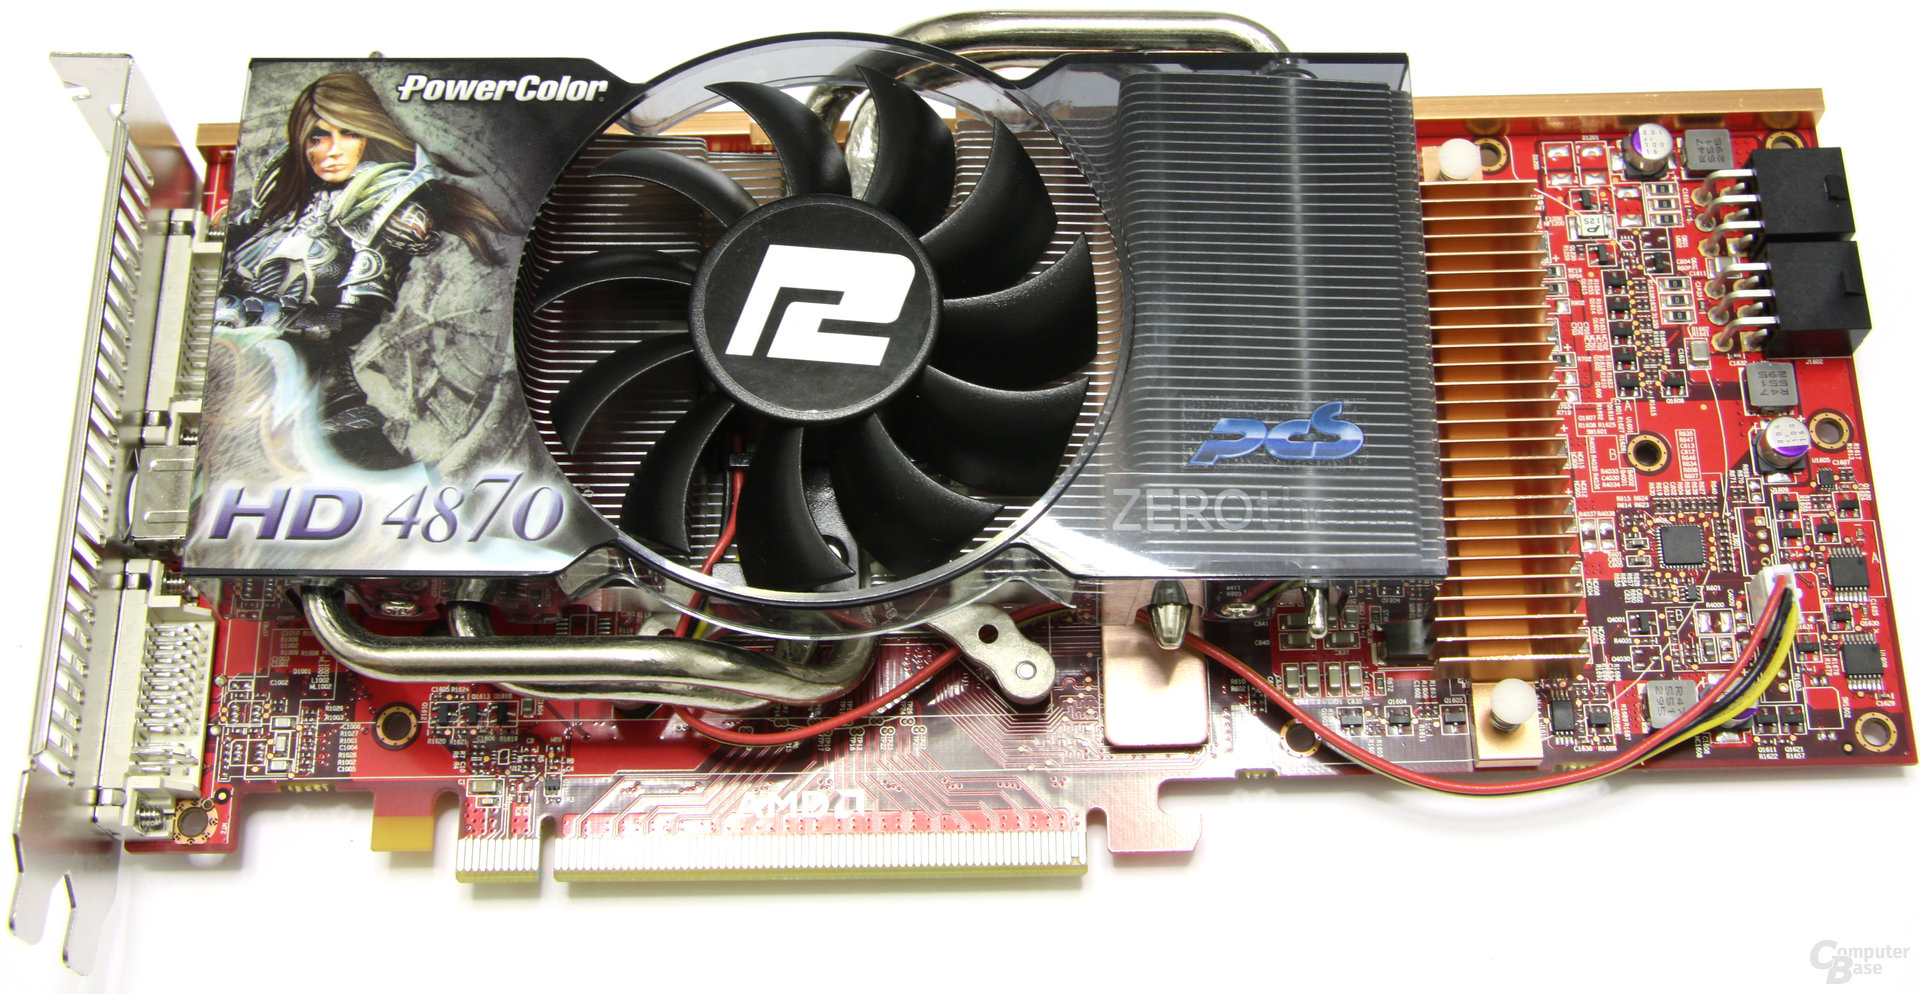 PowerColor Radeon HD 4870 PCS+